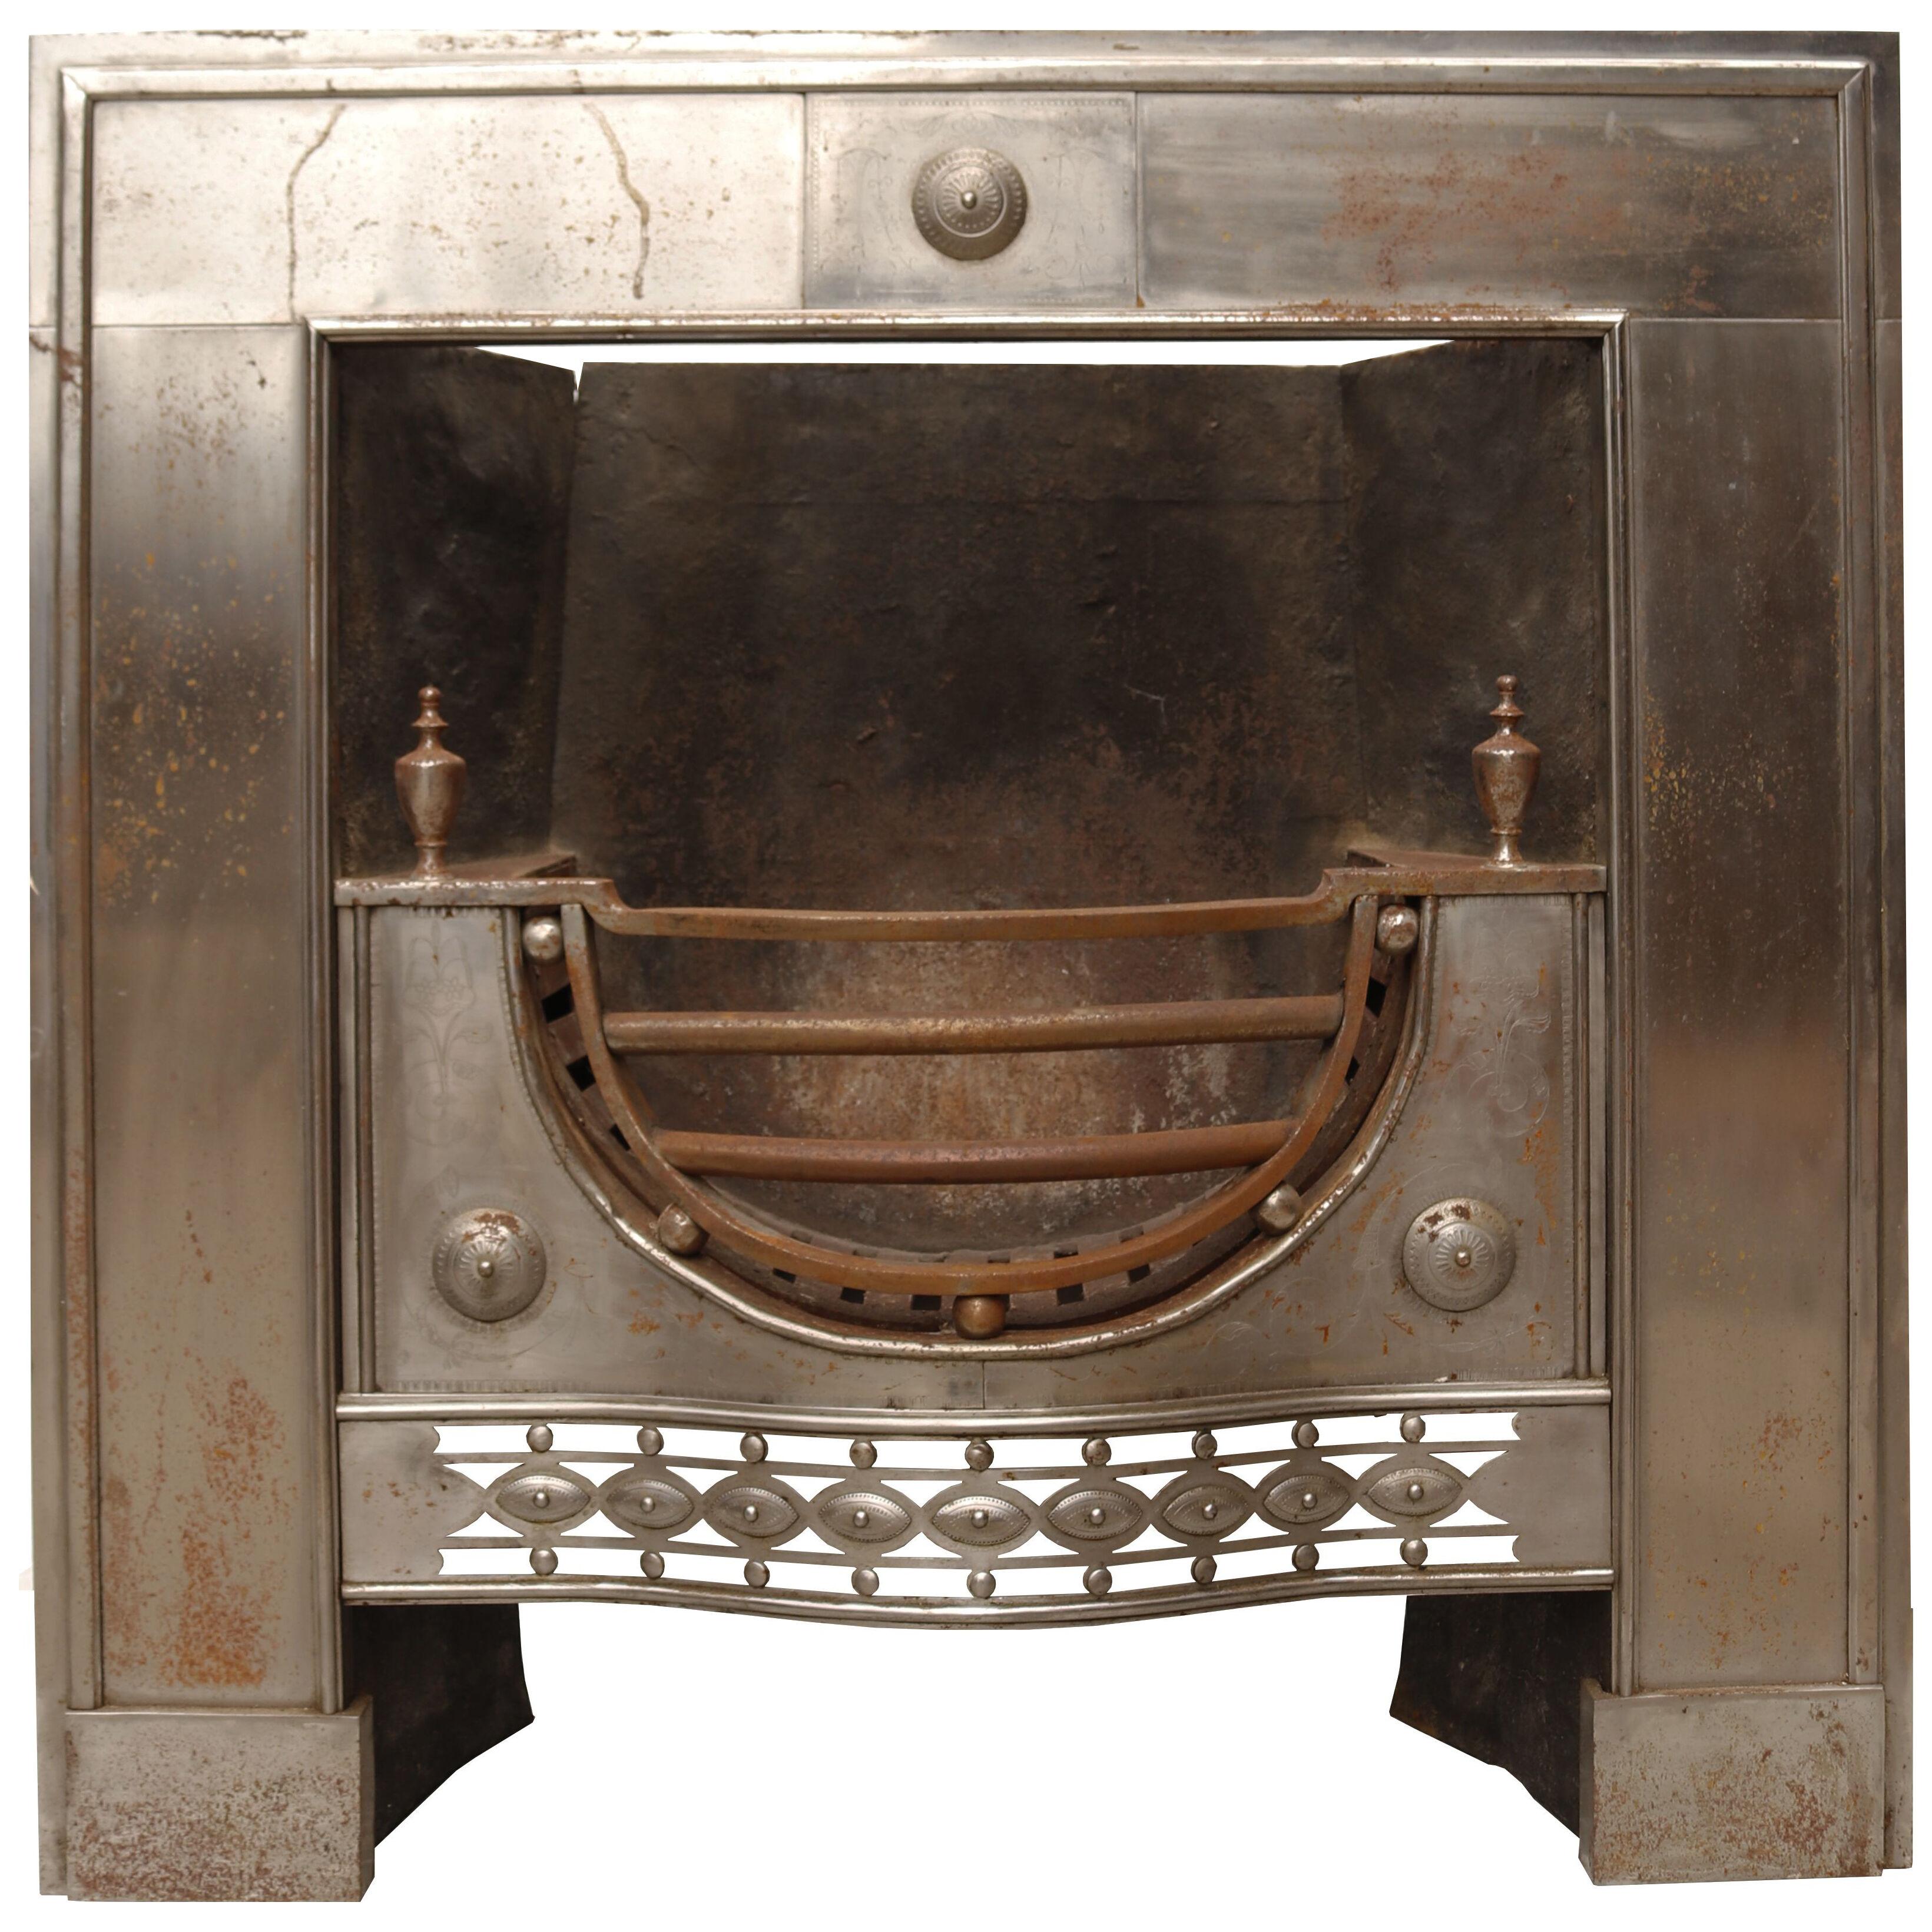 English 18th Century Register Fire Grate